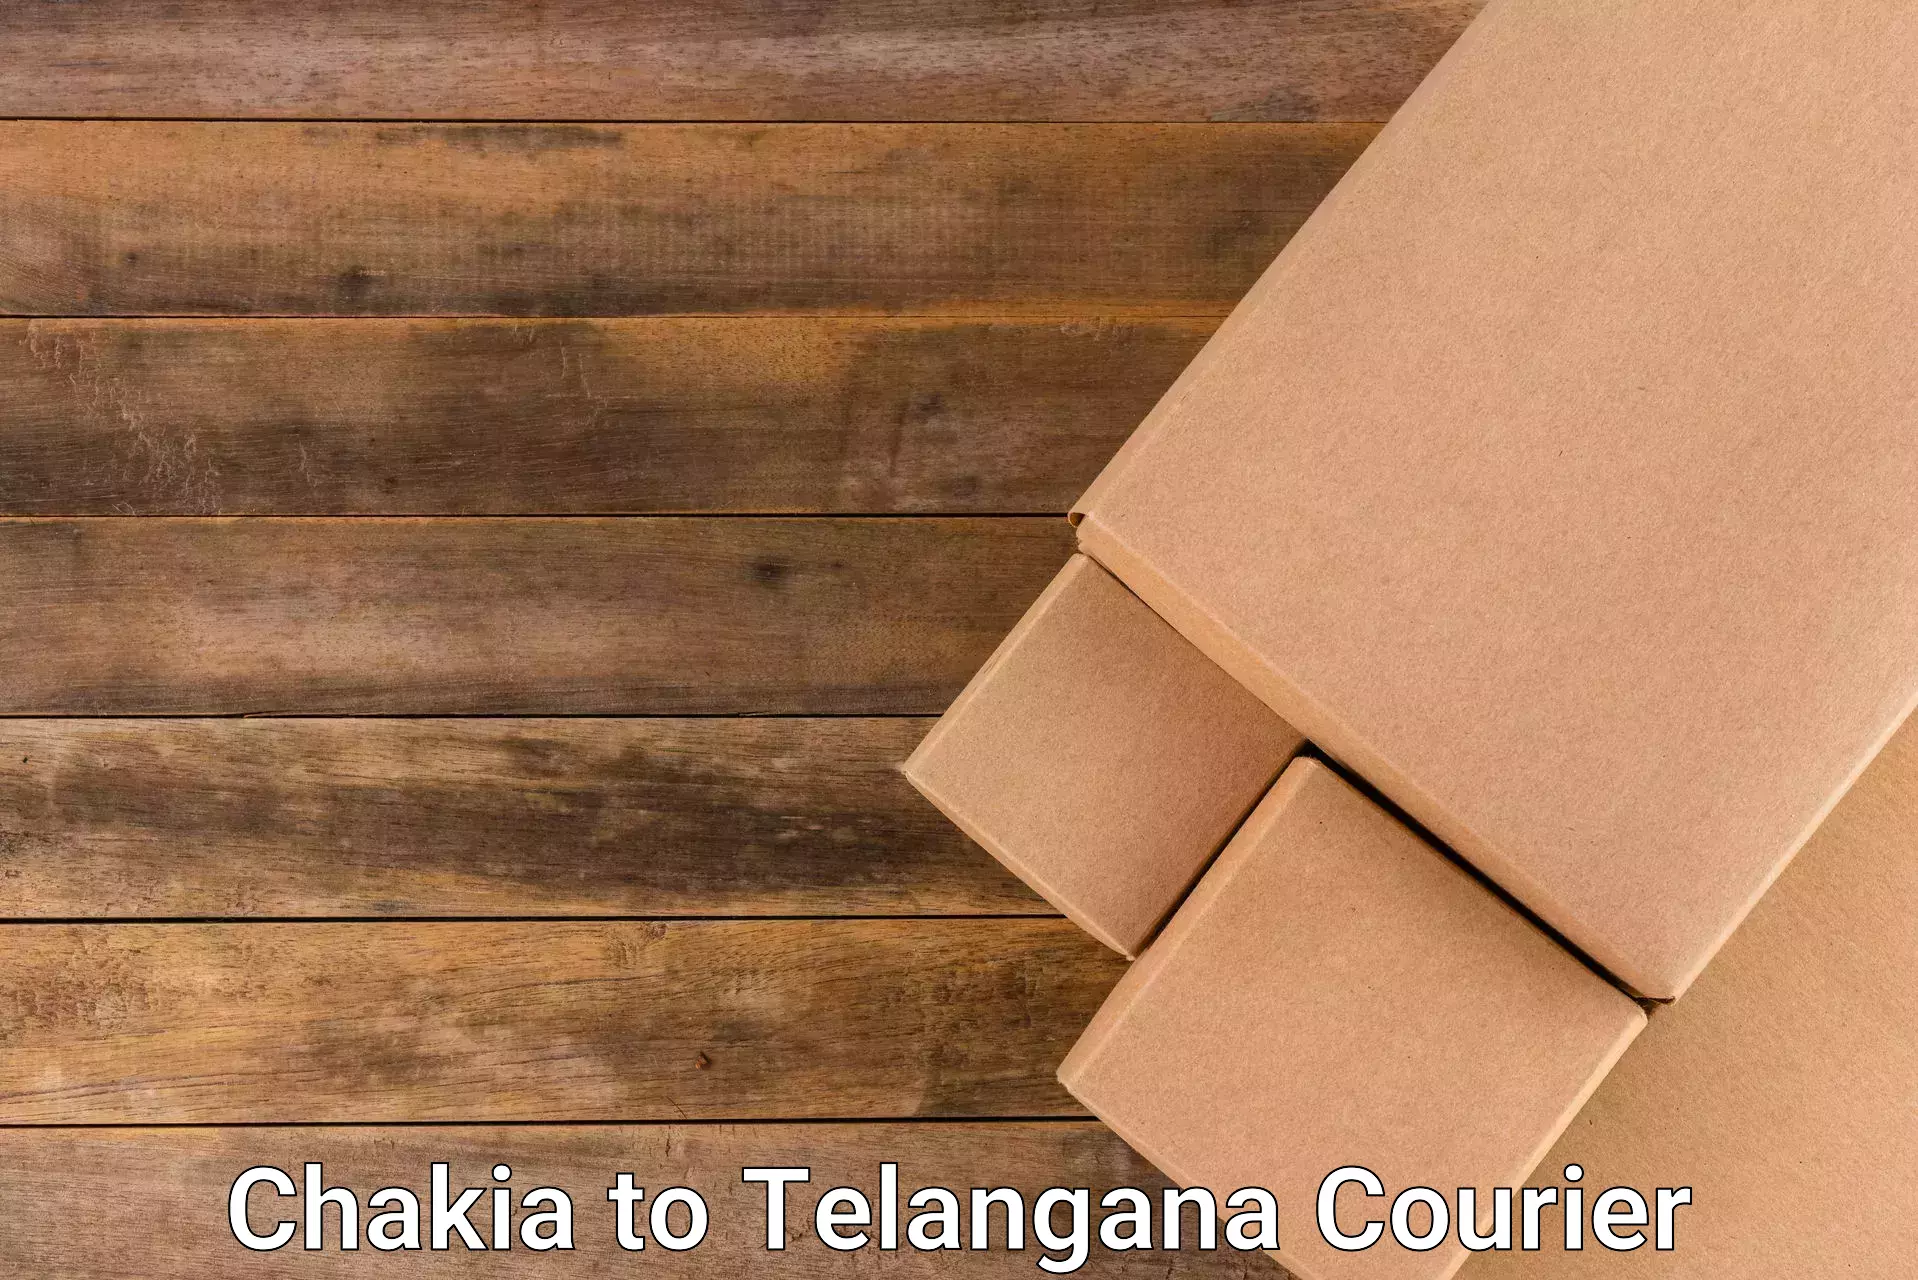 Efficient order fulfillment Chakia to Telangana